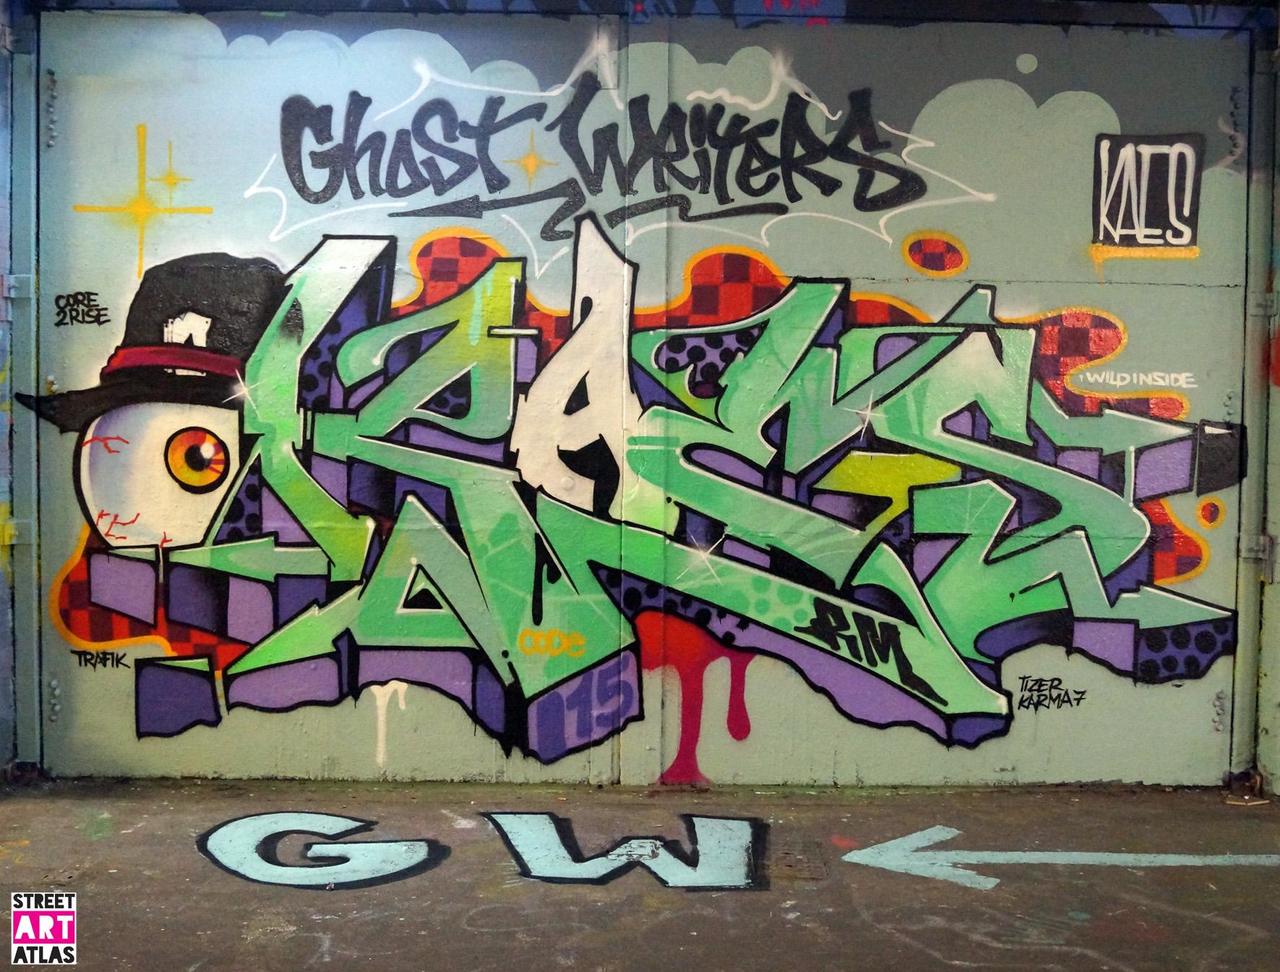 RT @StreetArtAtlas: Fresh paint tonight by #Kaes @ #LeakeStreet #Ghostwriters #Streetart #Graffiti #FreshPaint http://t.co/YIqdtAobRn